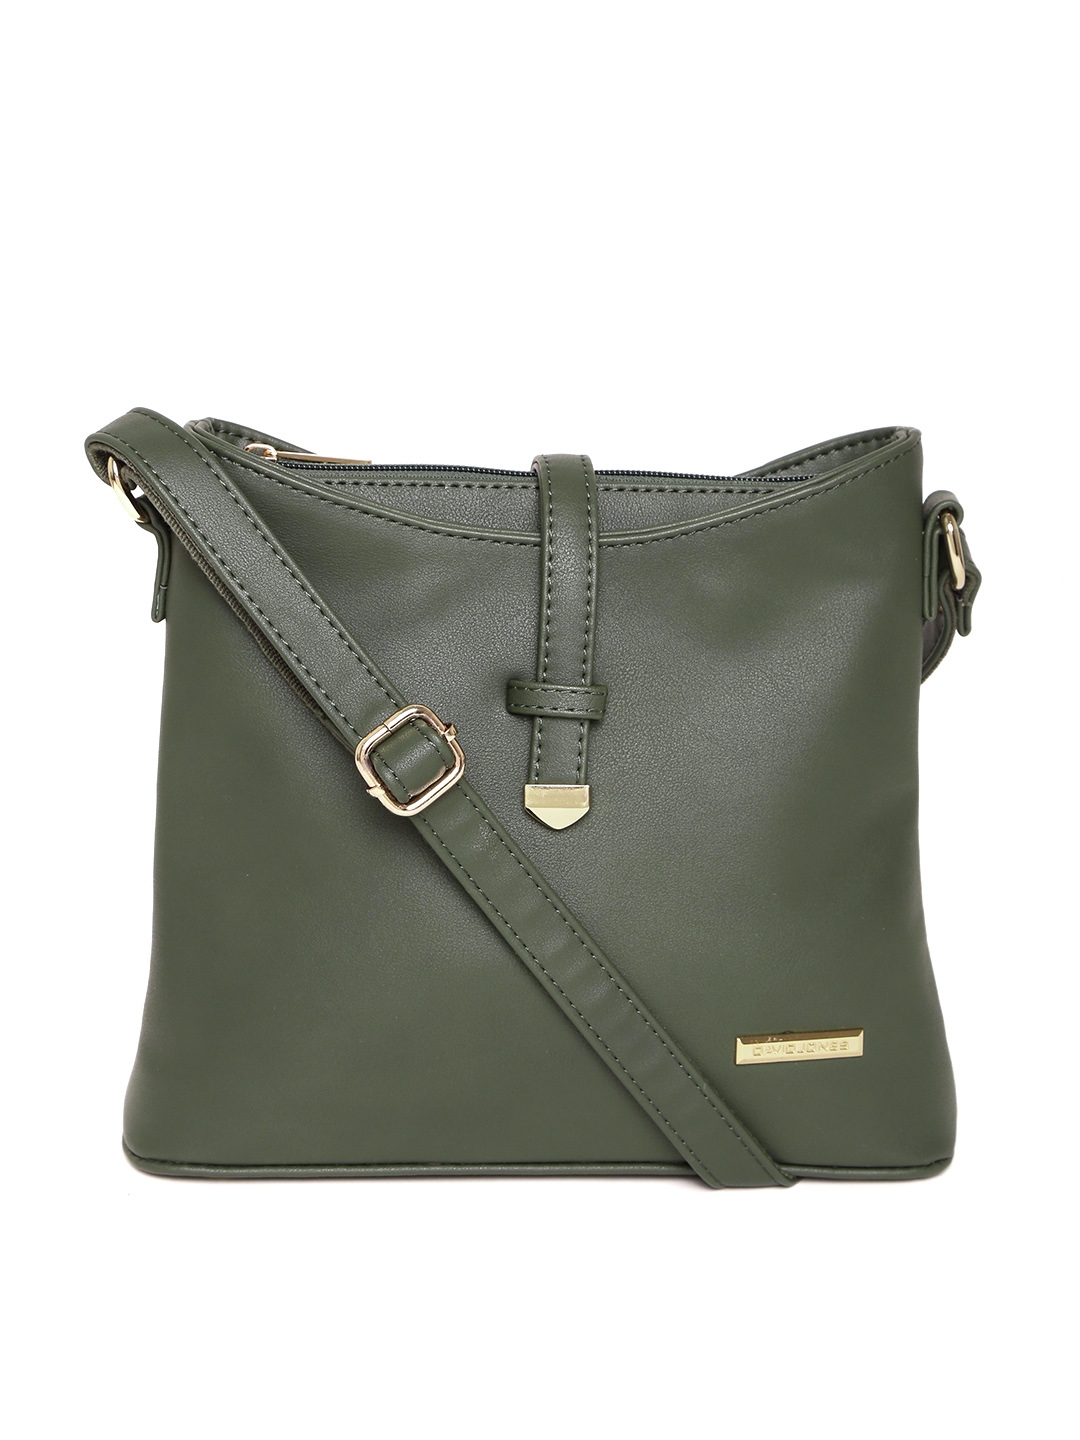 Buy David Jones Olive Green Solid Sling Bag - Handbags for Women